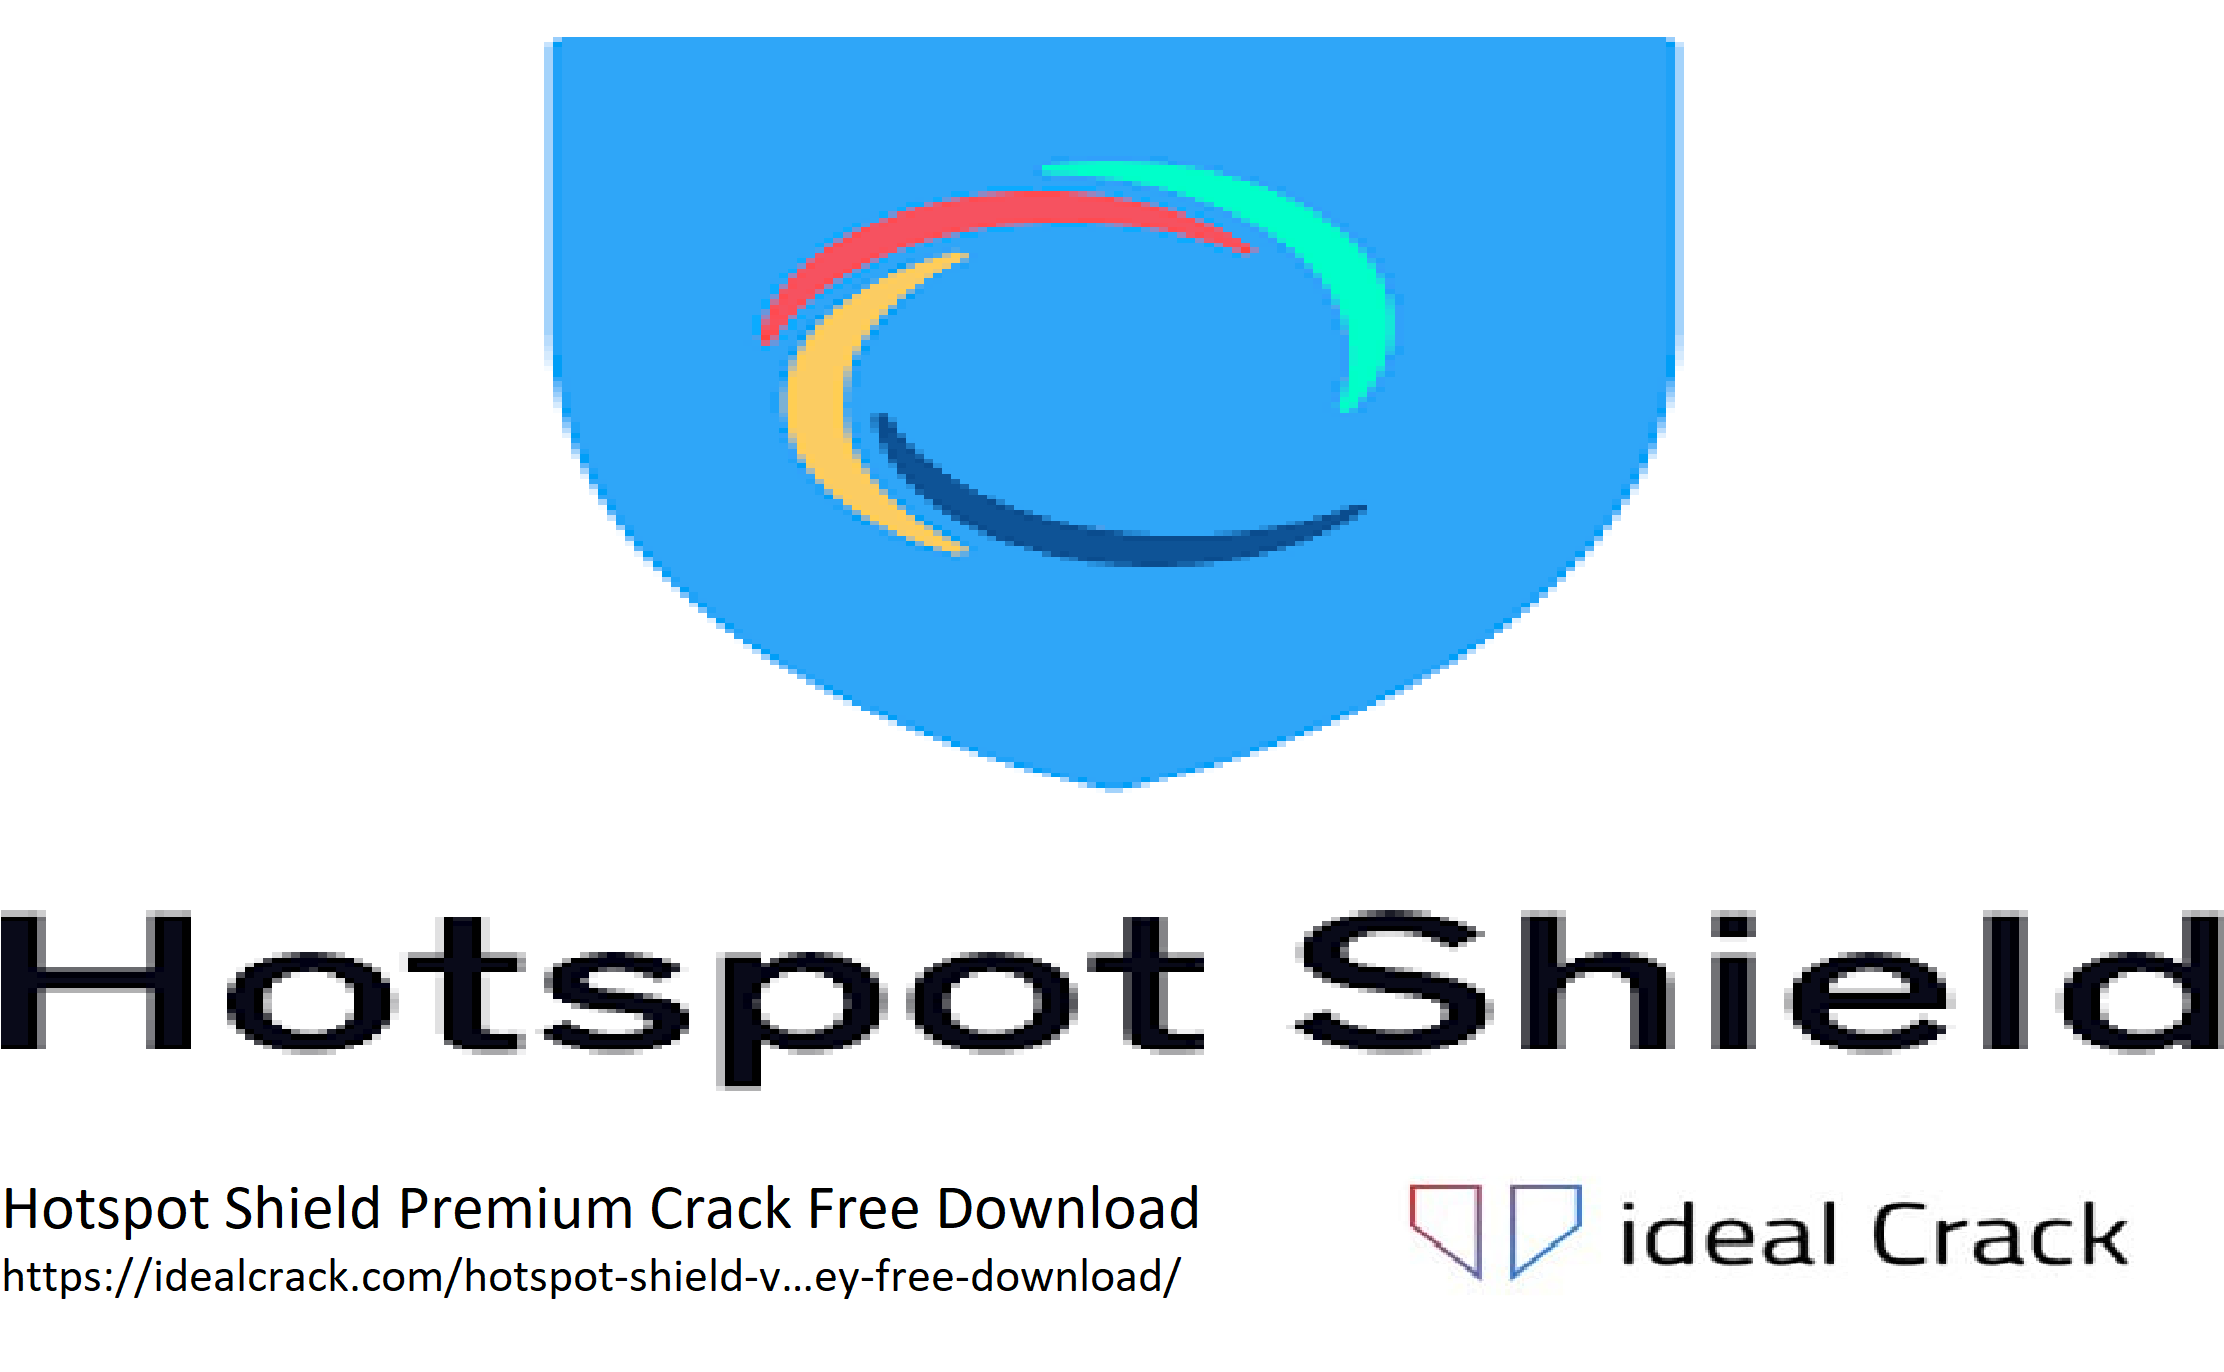 Hotspot Shield Premium Crack Free Download